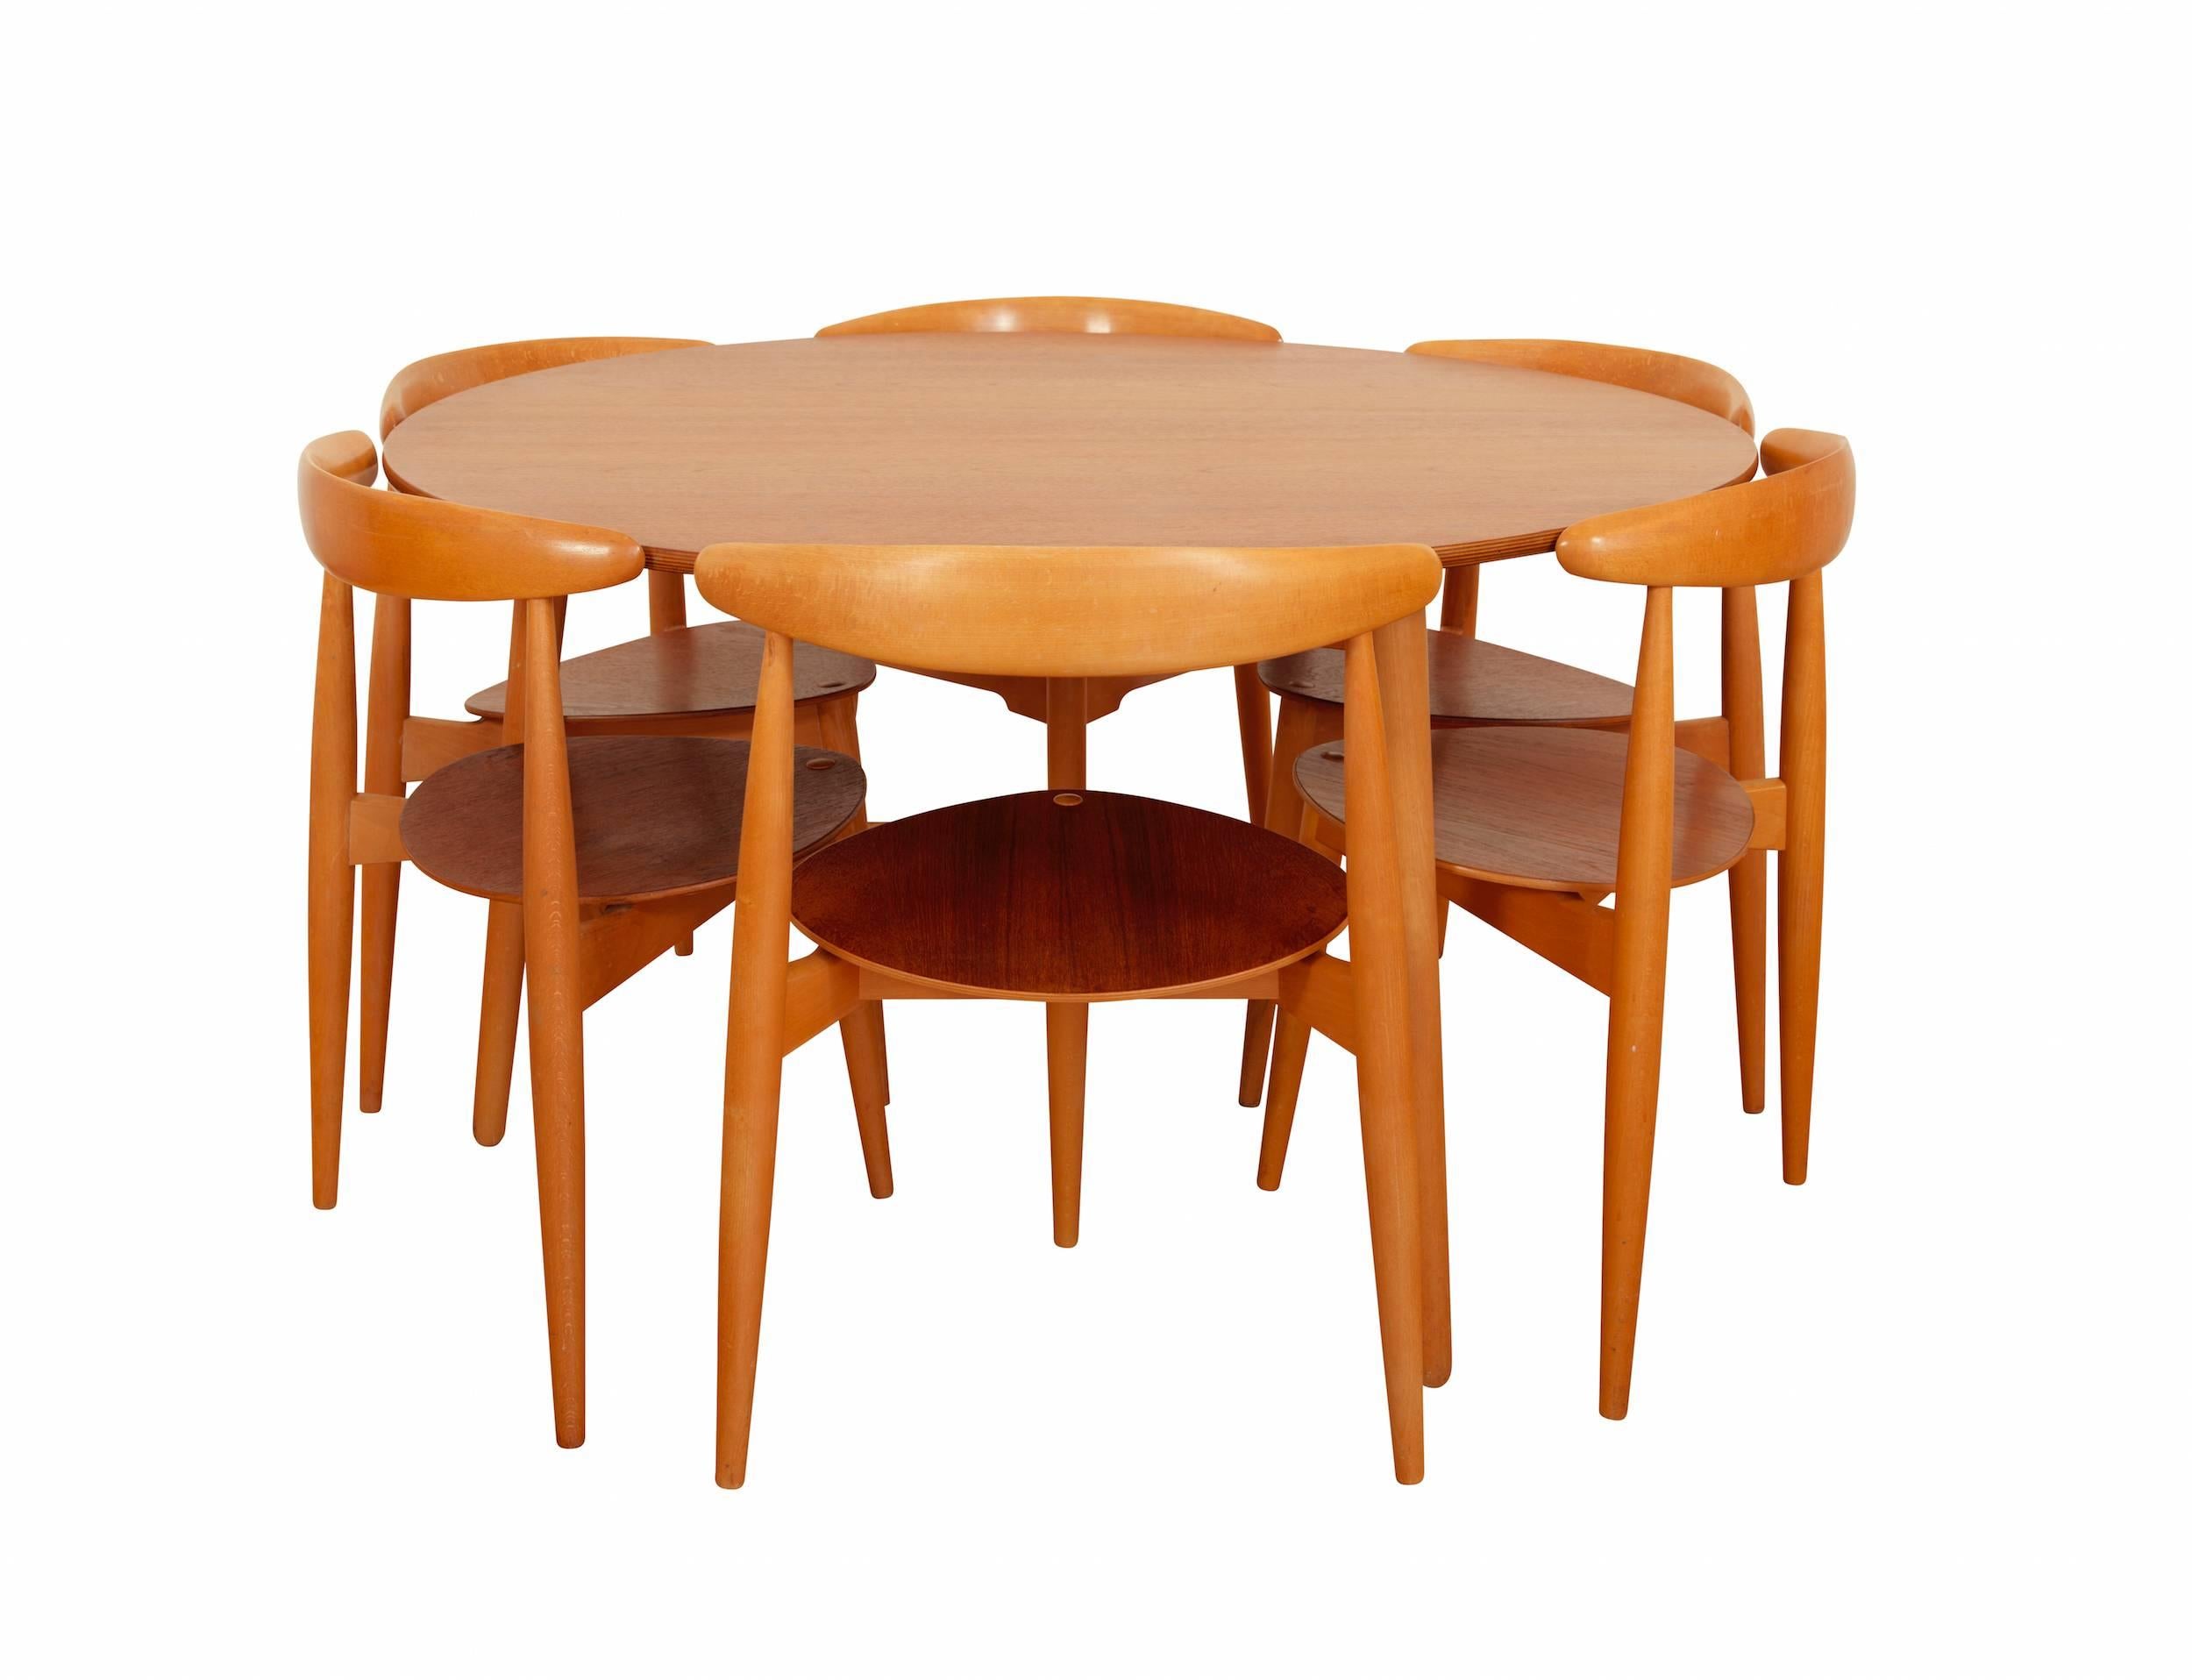 Oak and teak circular dinning table with six matching chairs. 
Manufactured by Fritz Hansen.

Litterature: 
Johan Møller Nielsen: 